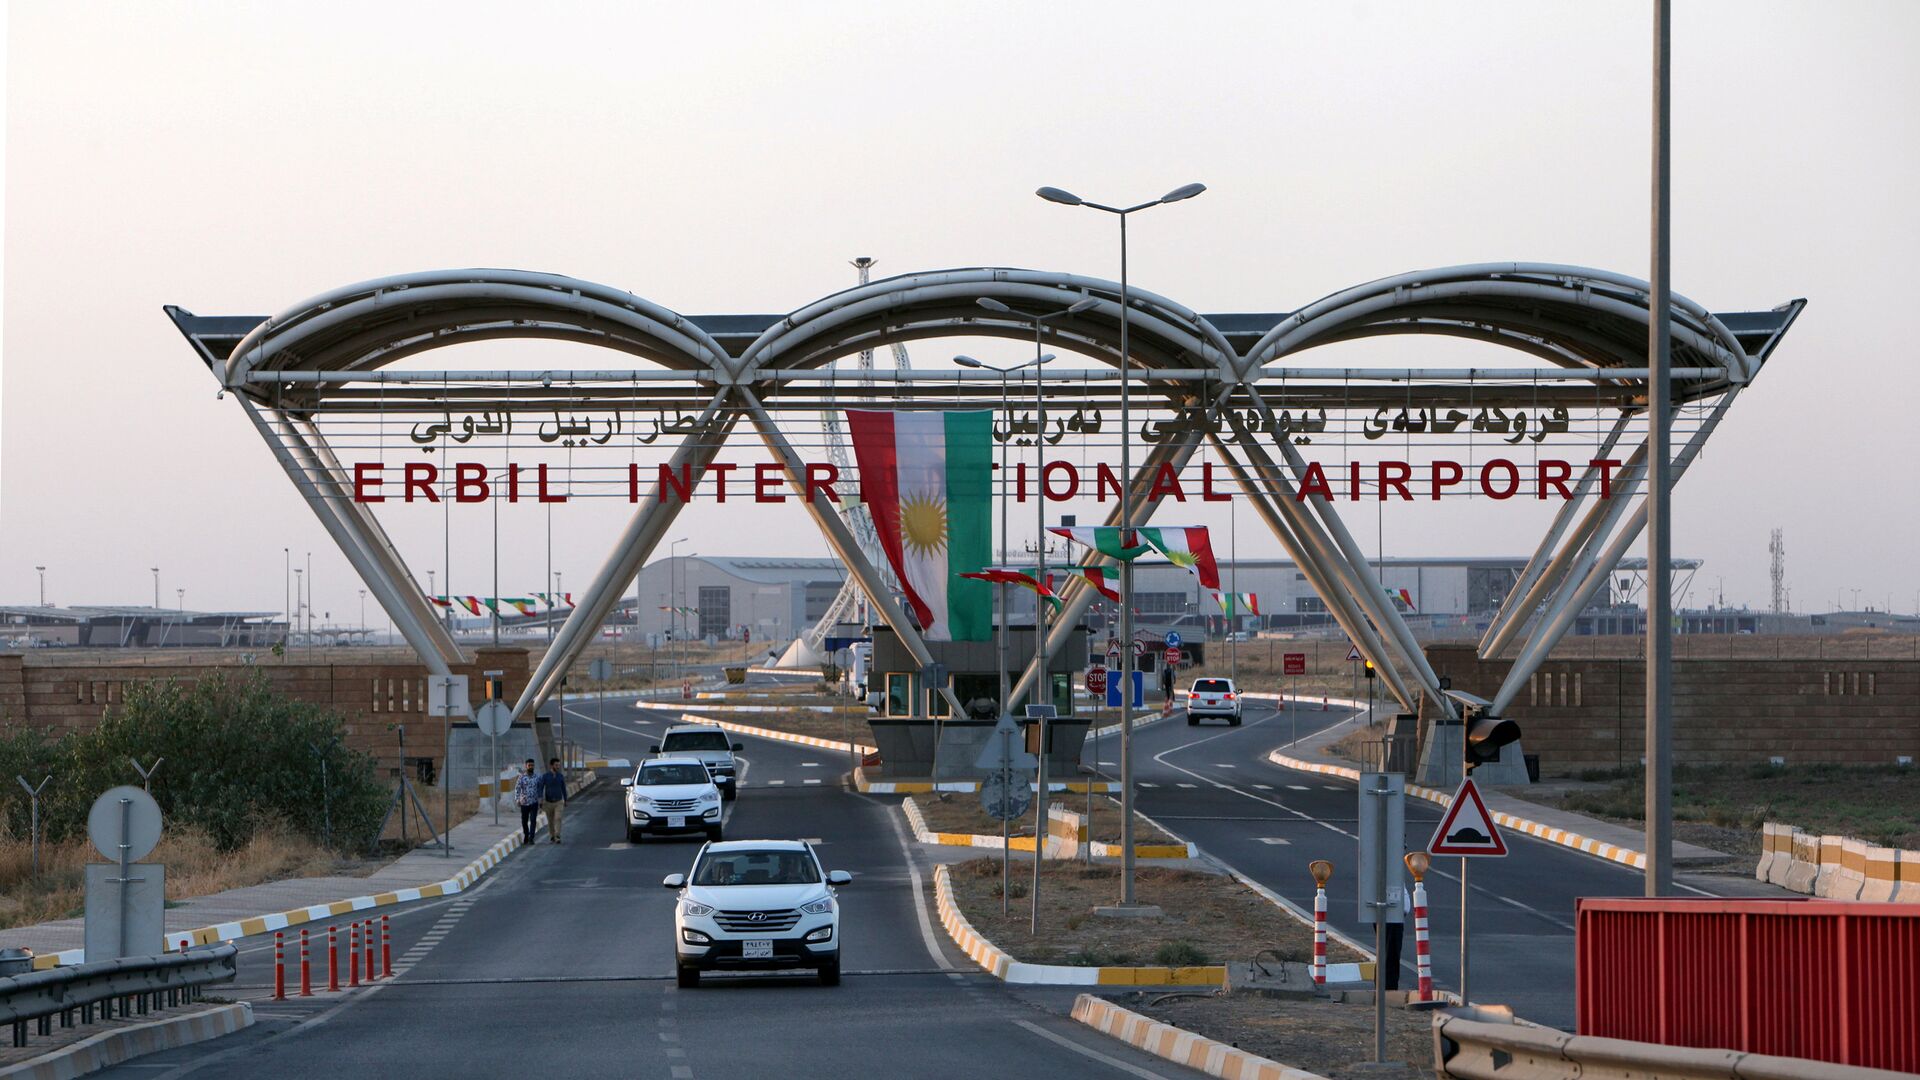 Iraq's oil minister arrives in Erbil